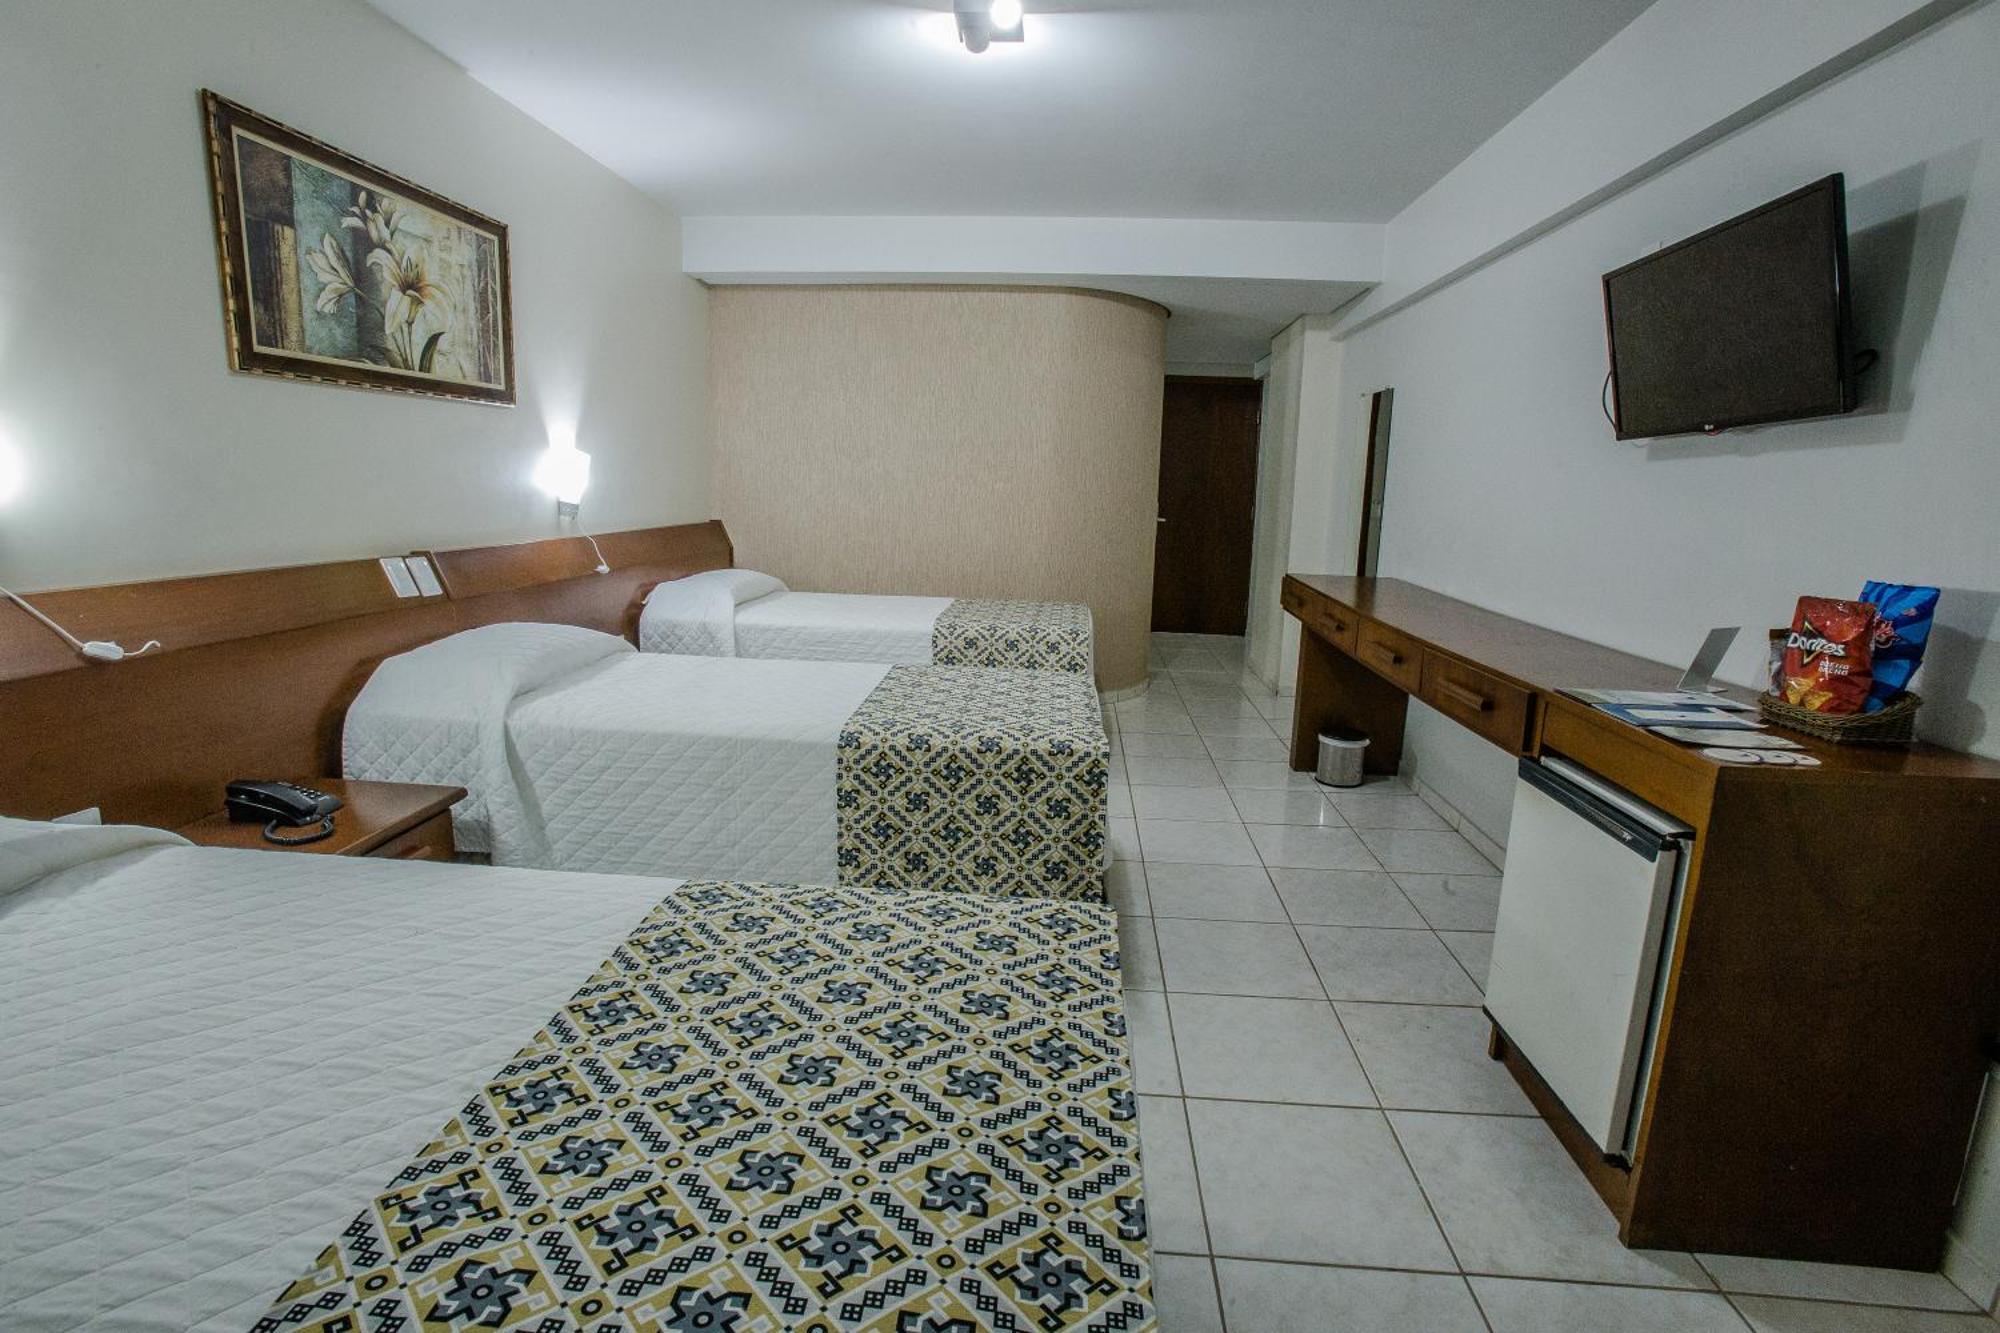 Foz Presidente Comfort Hotel Foz do Iguaçu Eksteriør billede